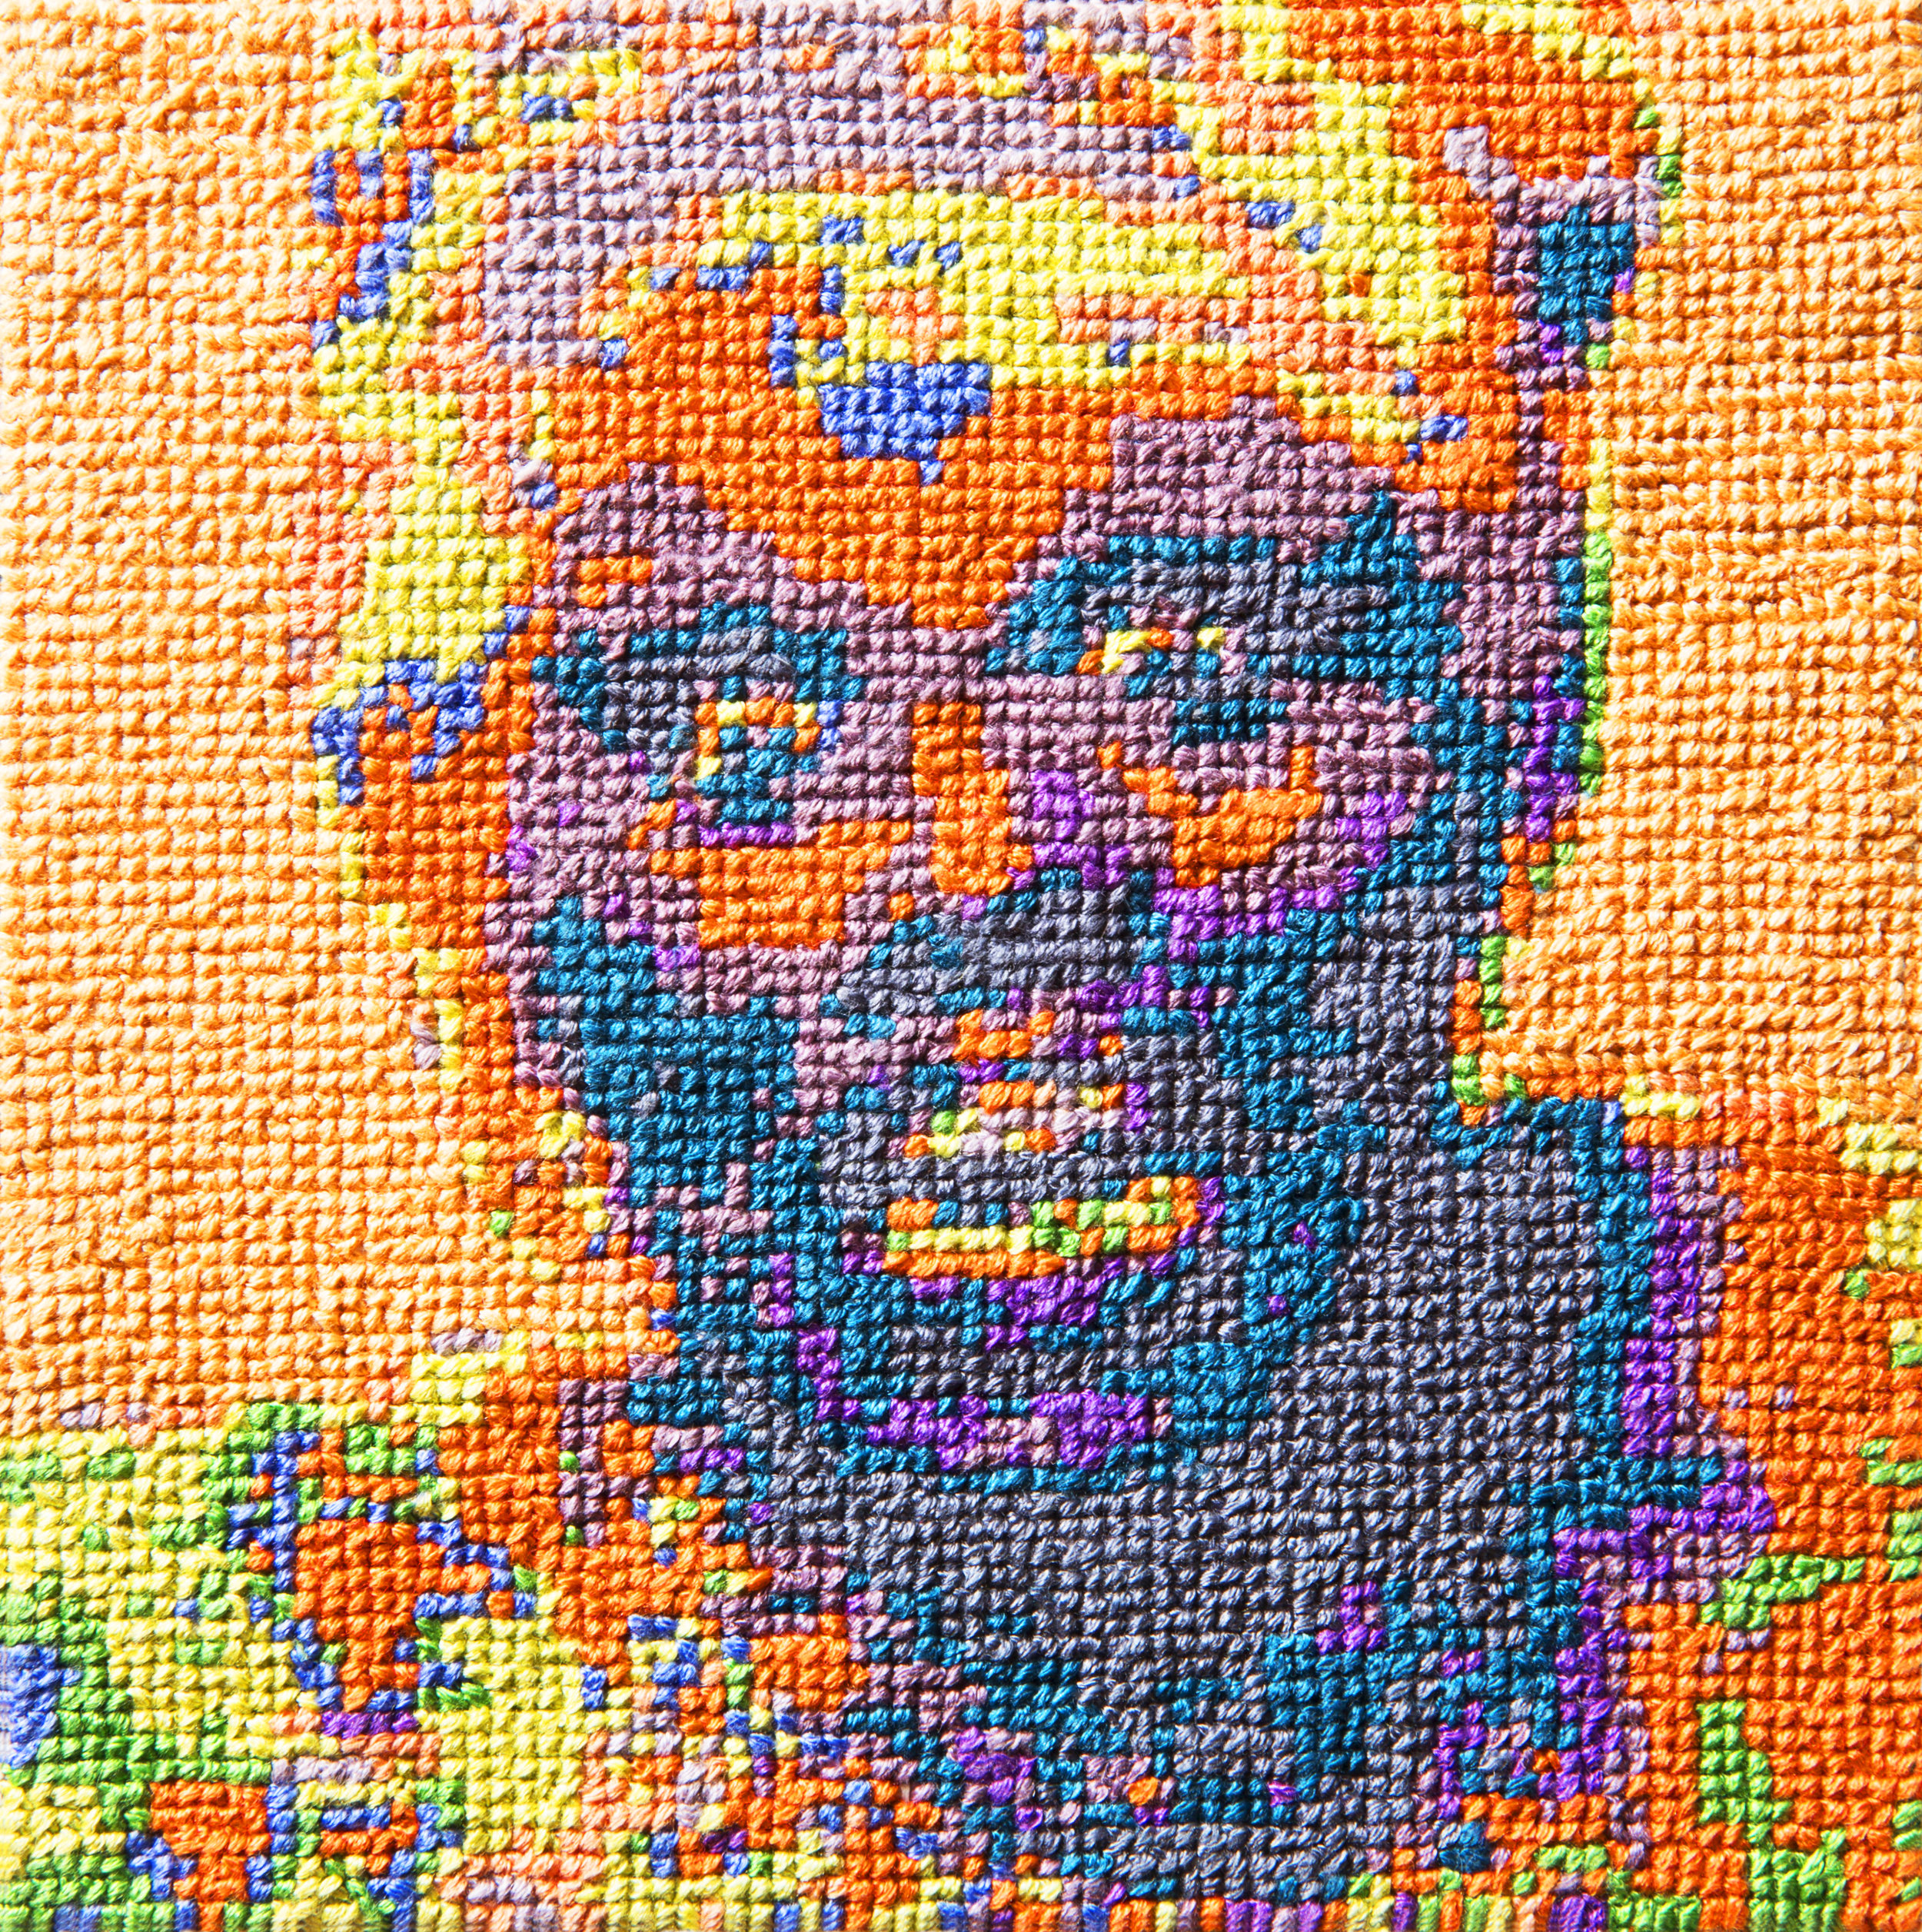   Frame 14   By Sally Hansell  5 x 5 inches  Cotton thread on aida cloth  2013 